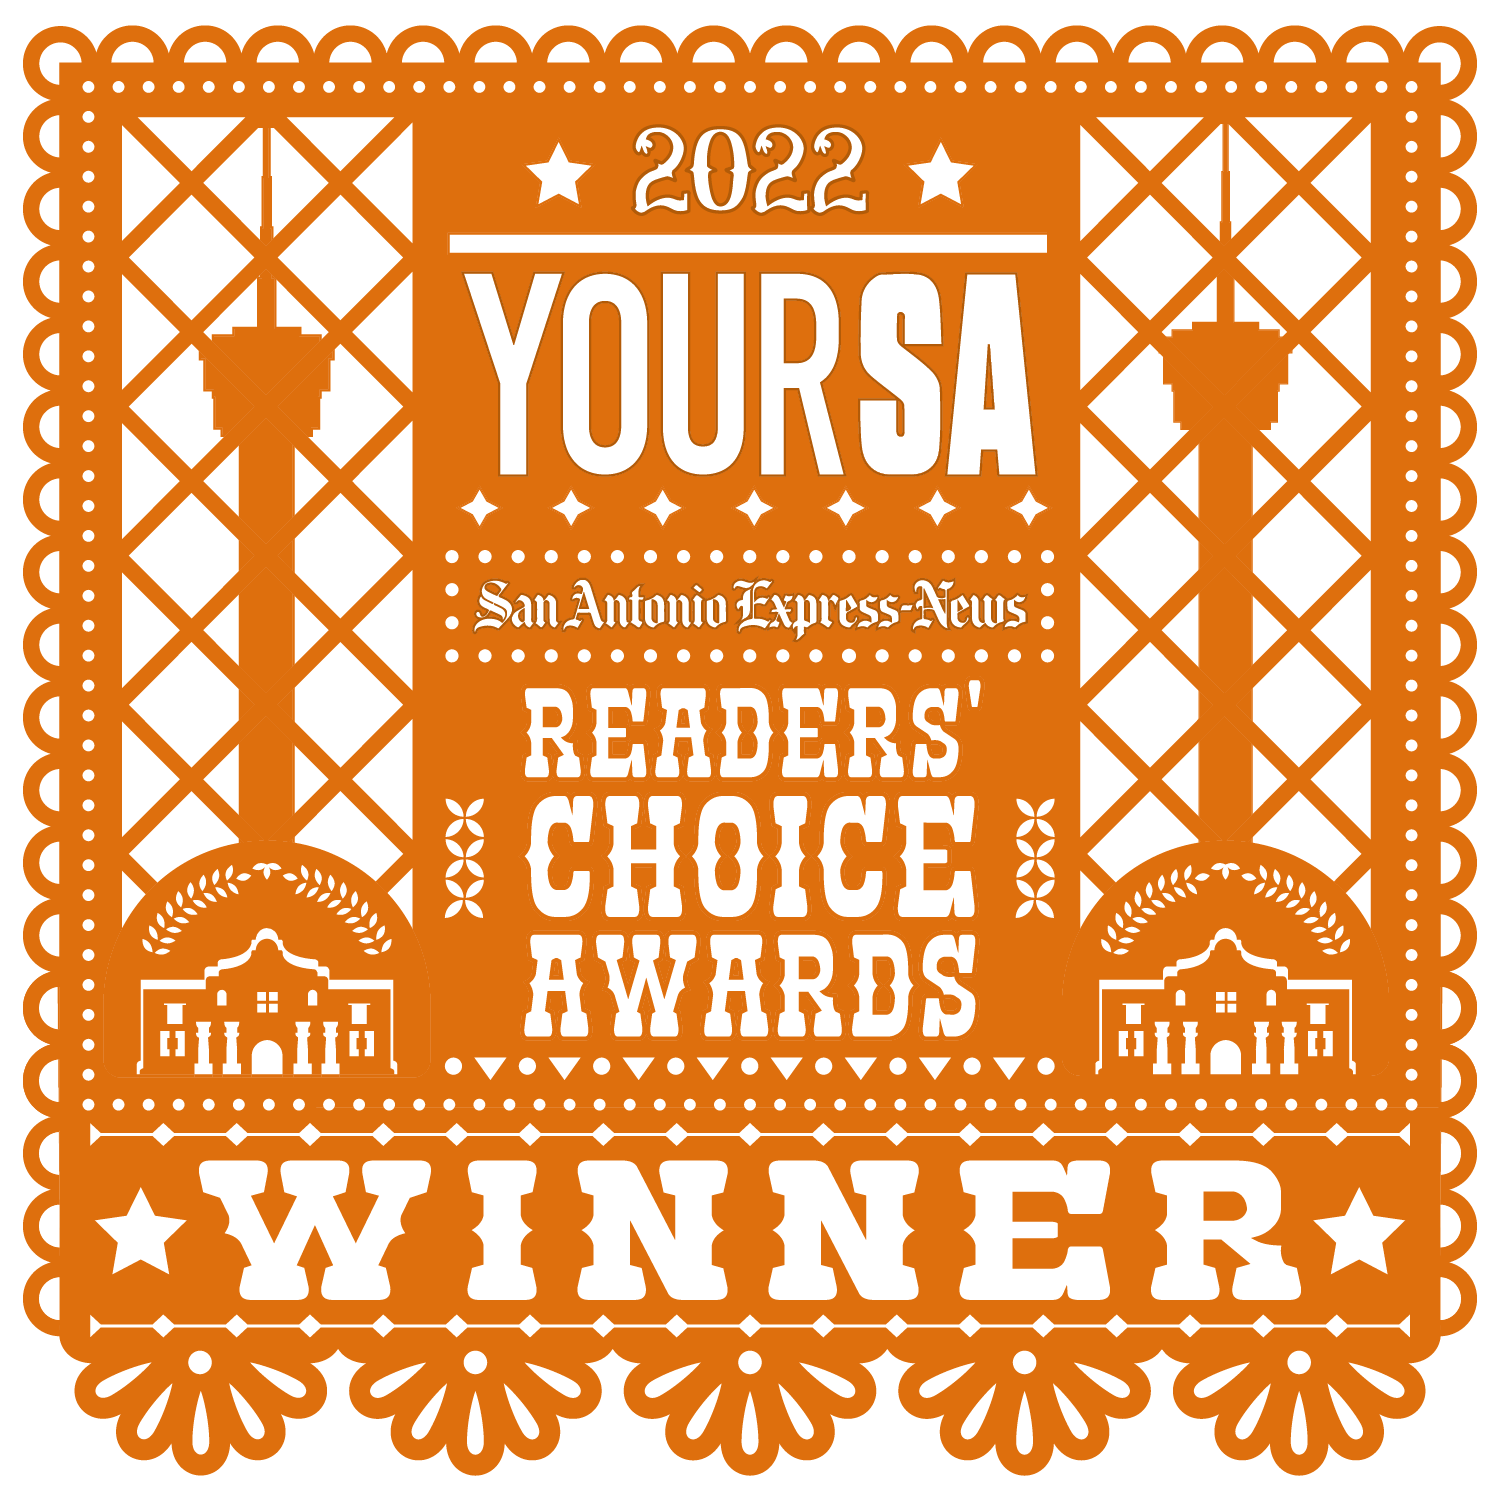 2021 Readers Choice Award Winner